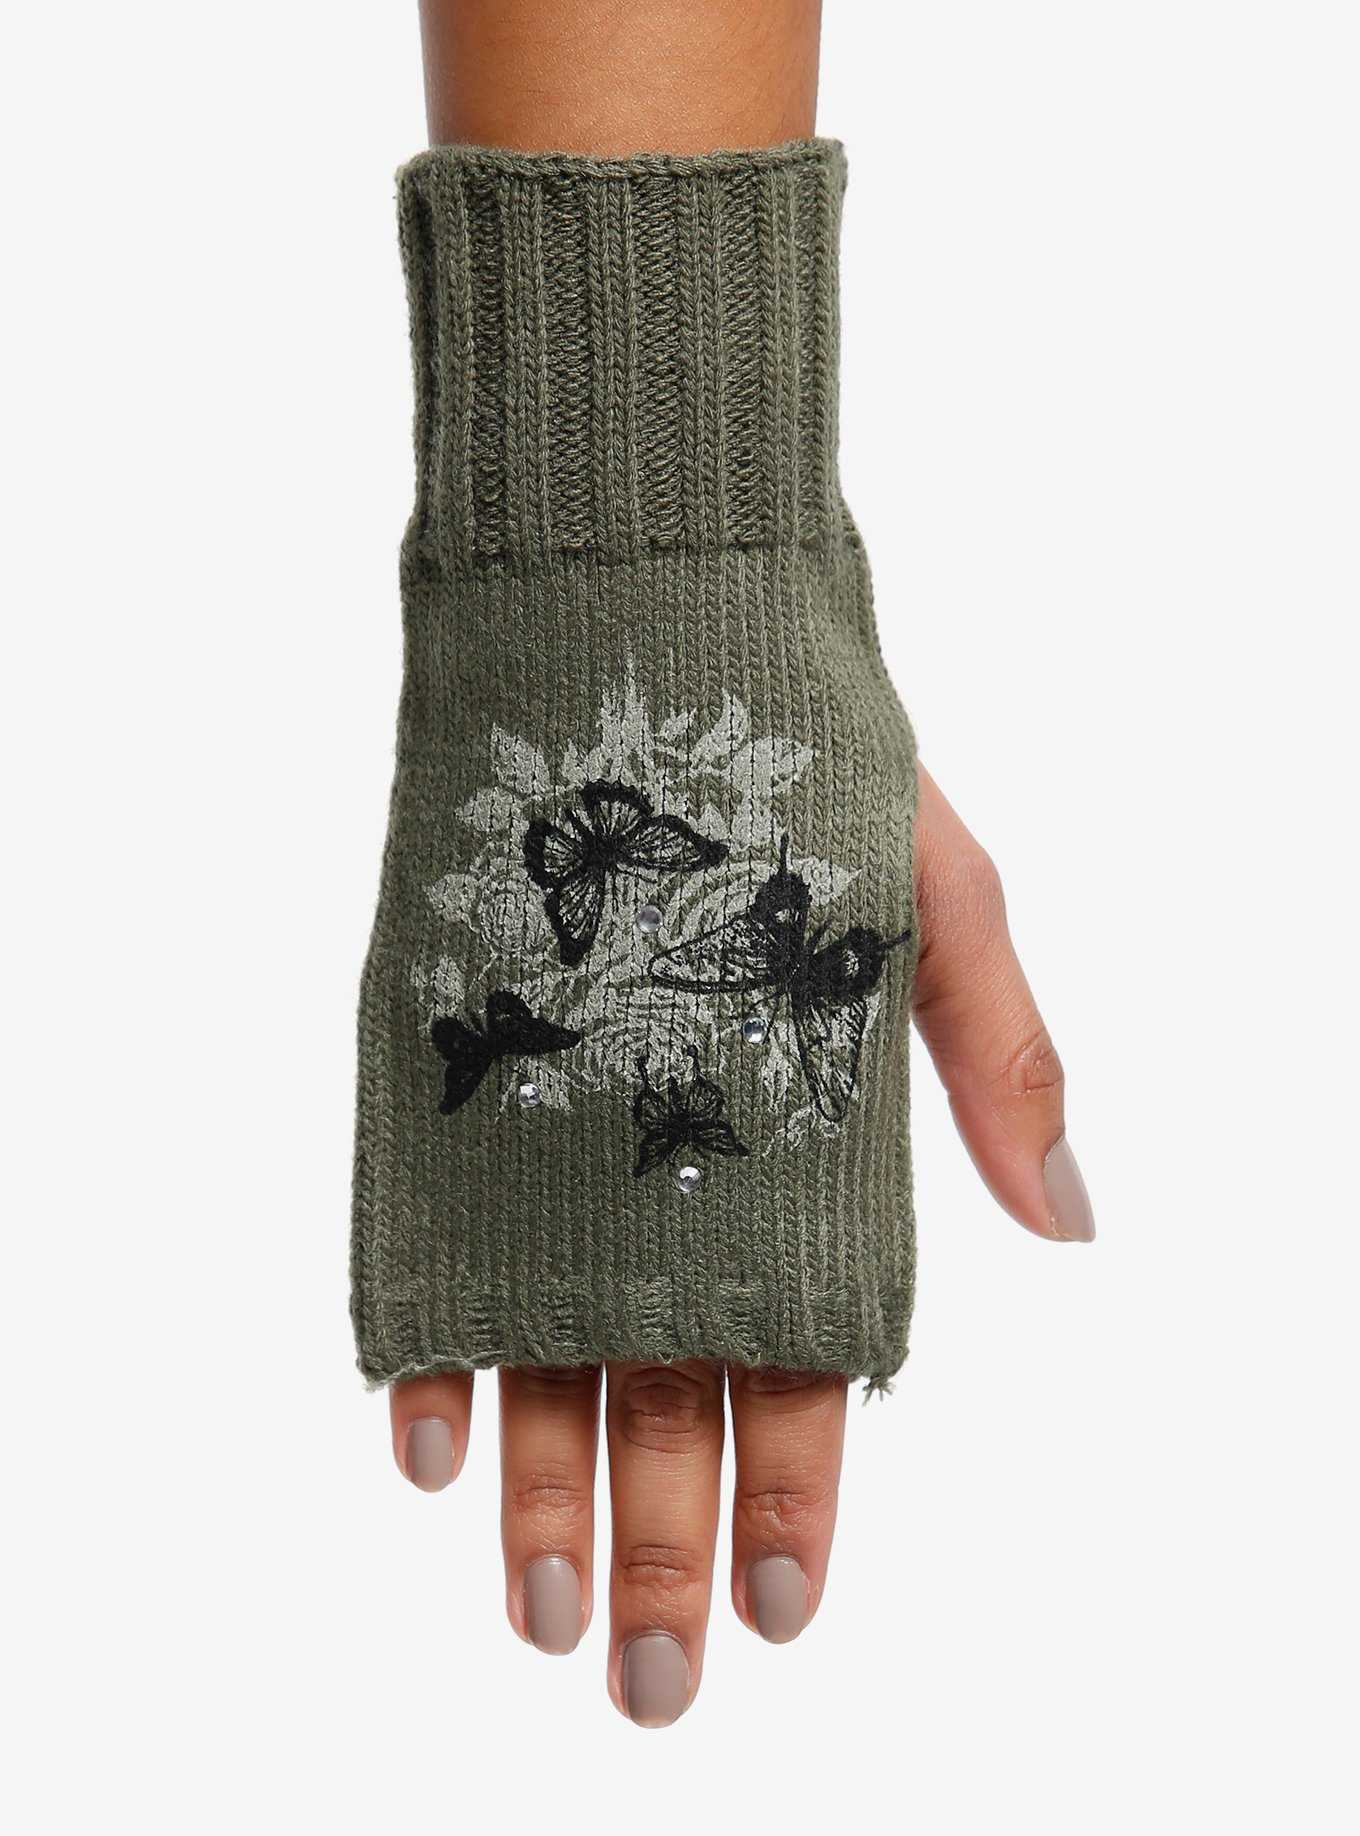 Green Butterfly Fingerless Gloves, , hi-res